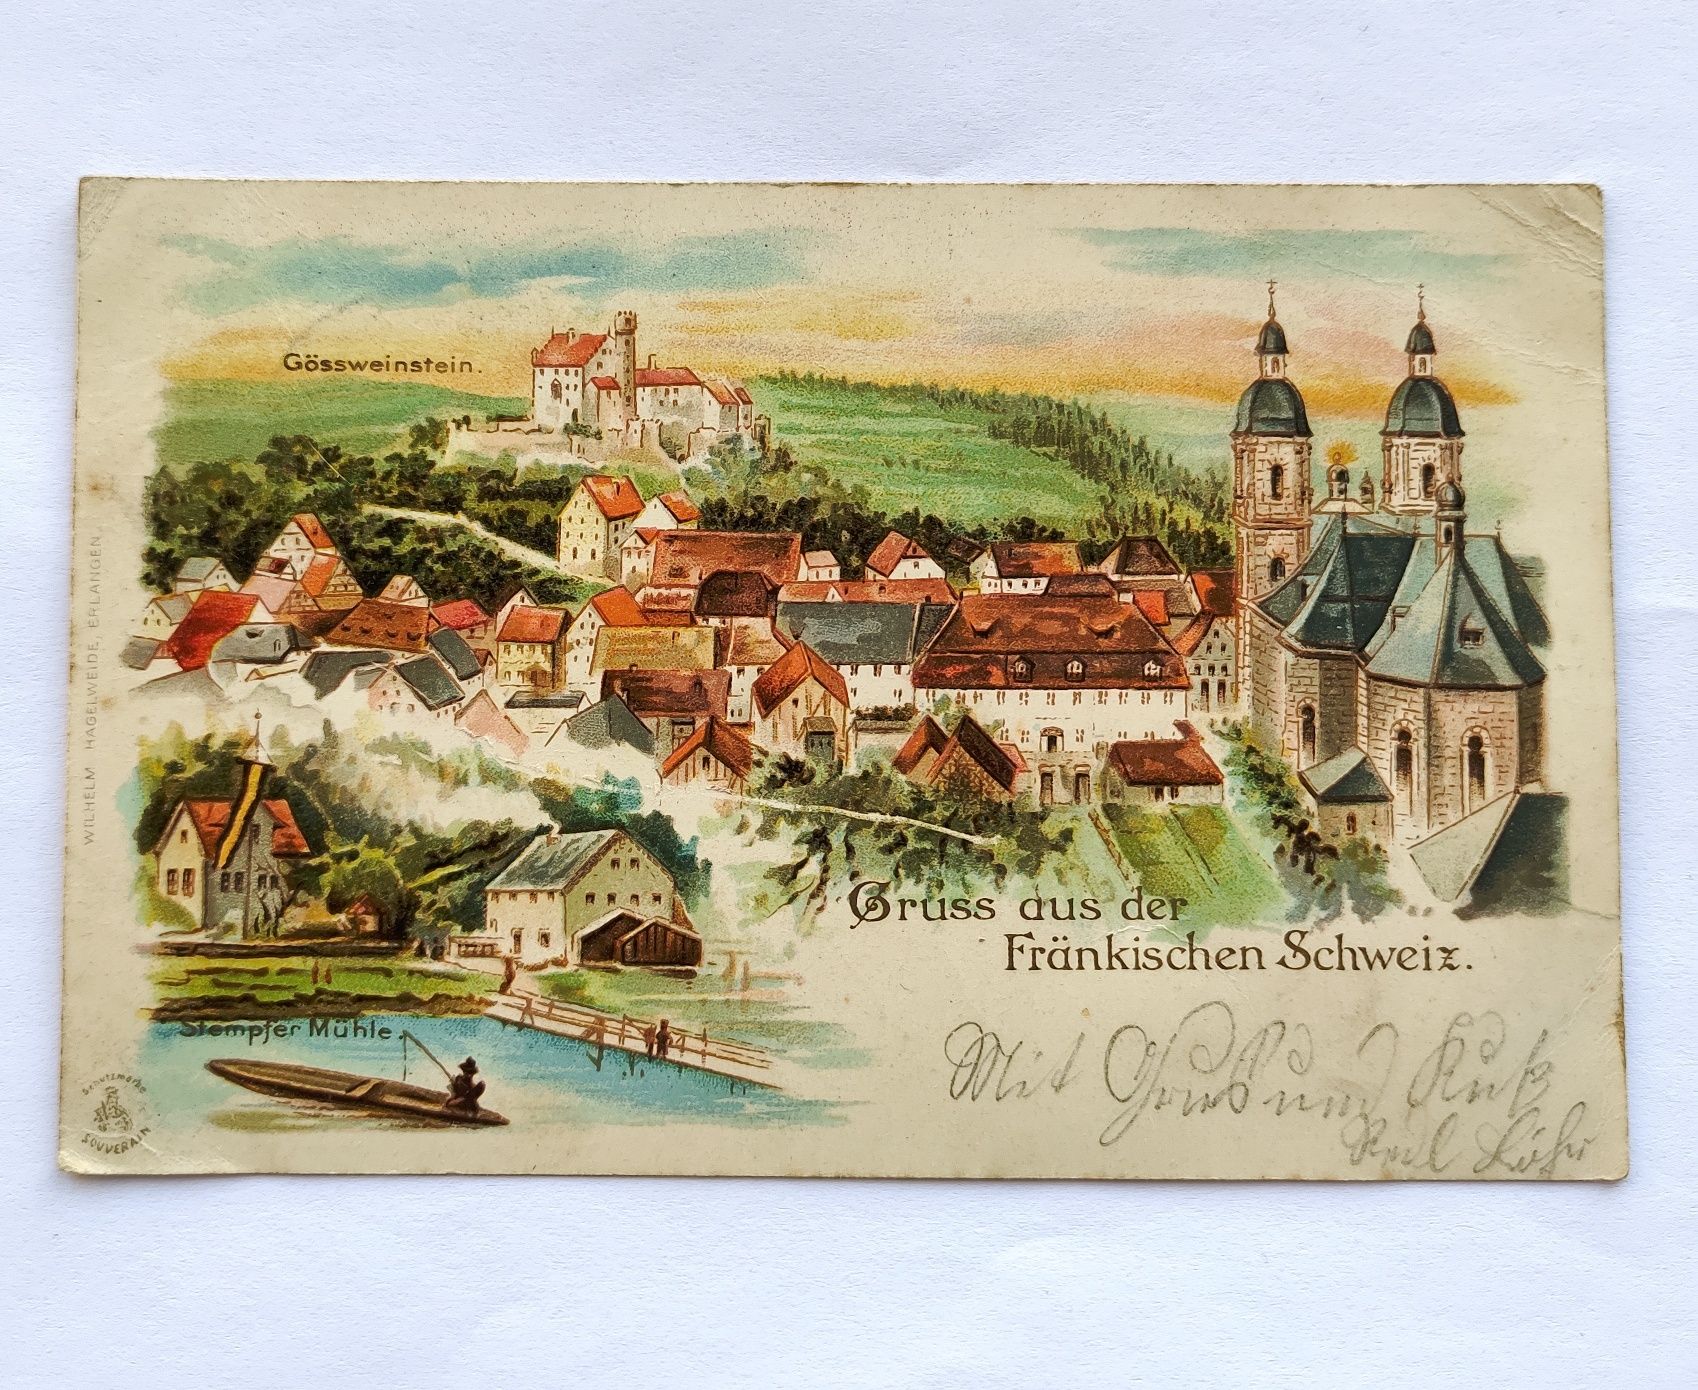 Timbre vechi pachete din 1972 si carti postale Germania anii 1900-1945